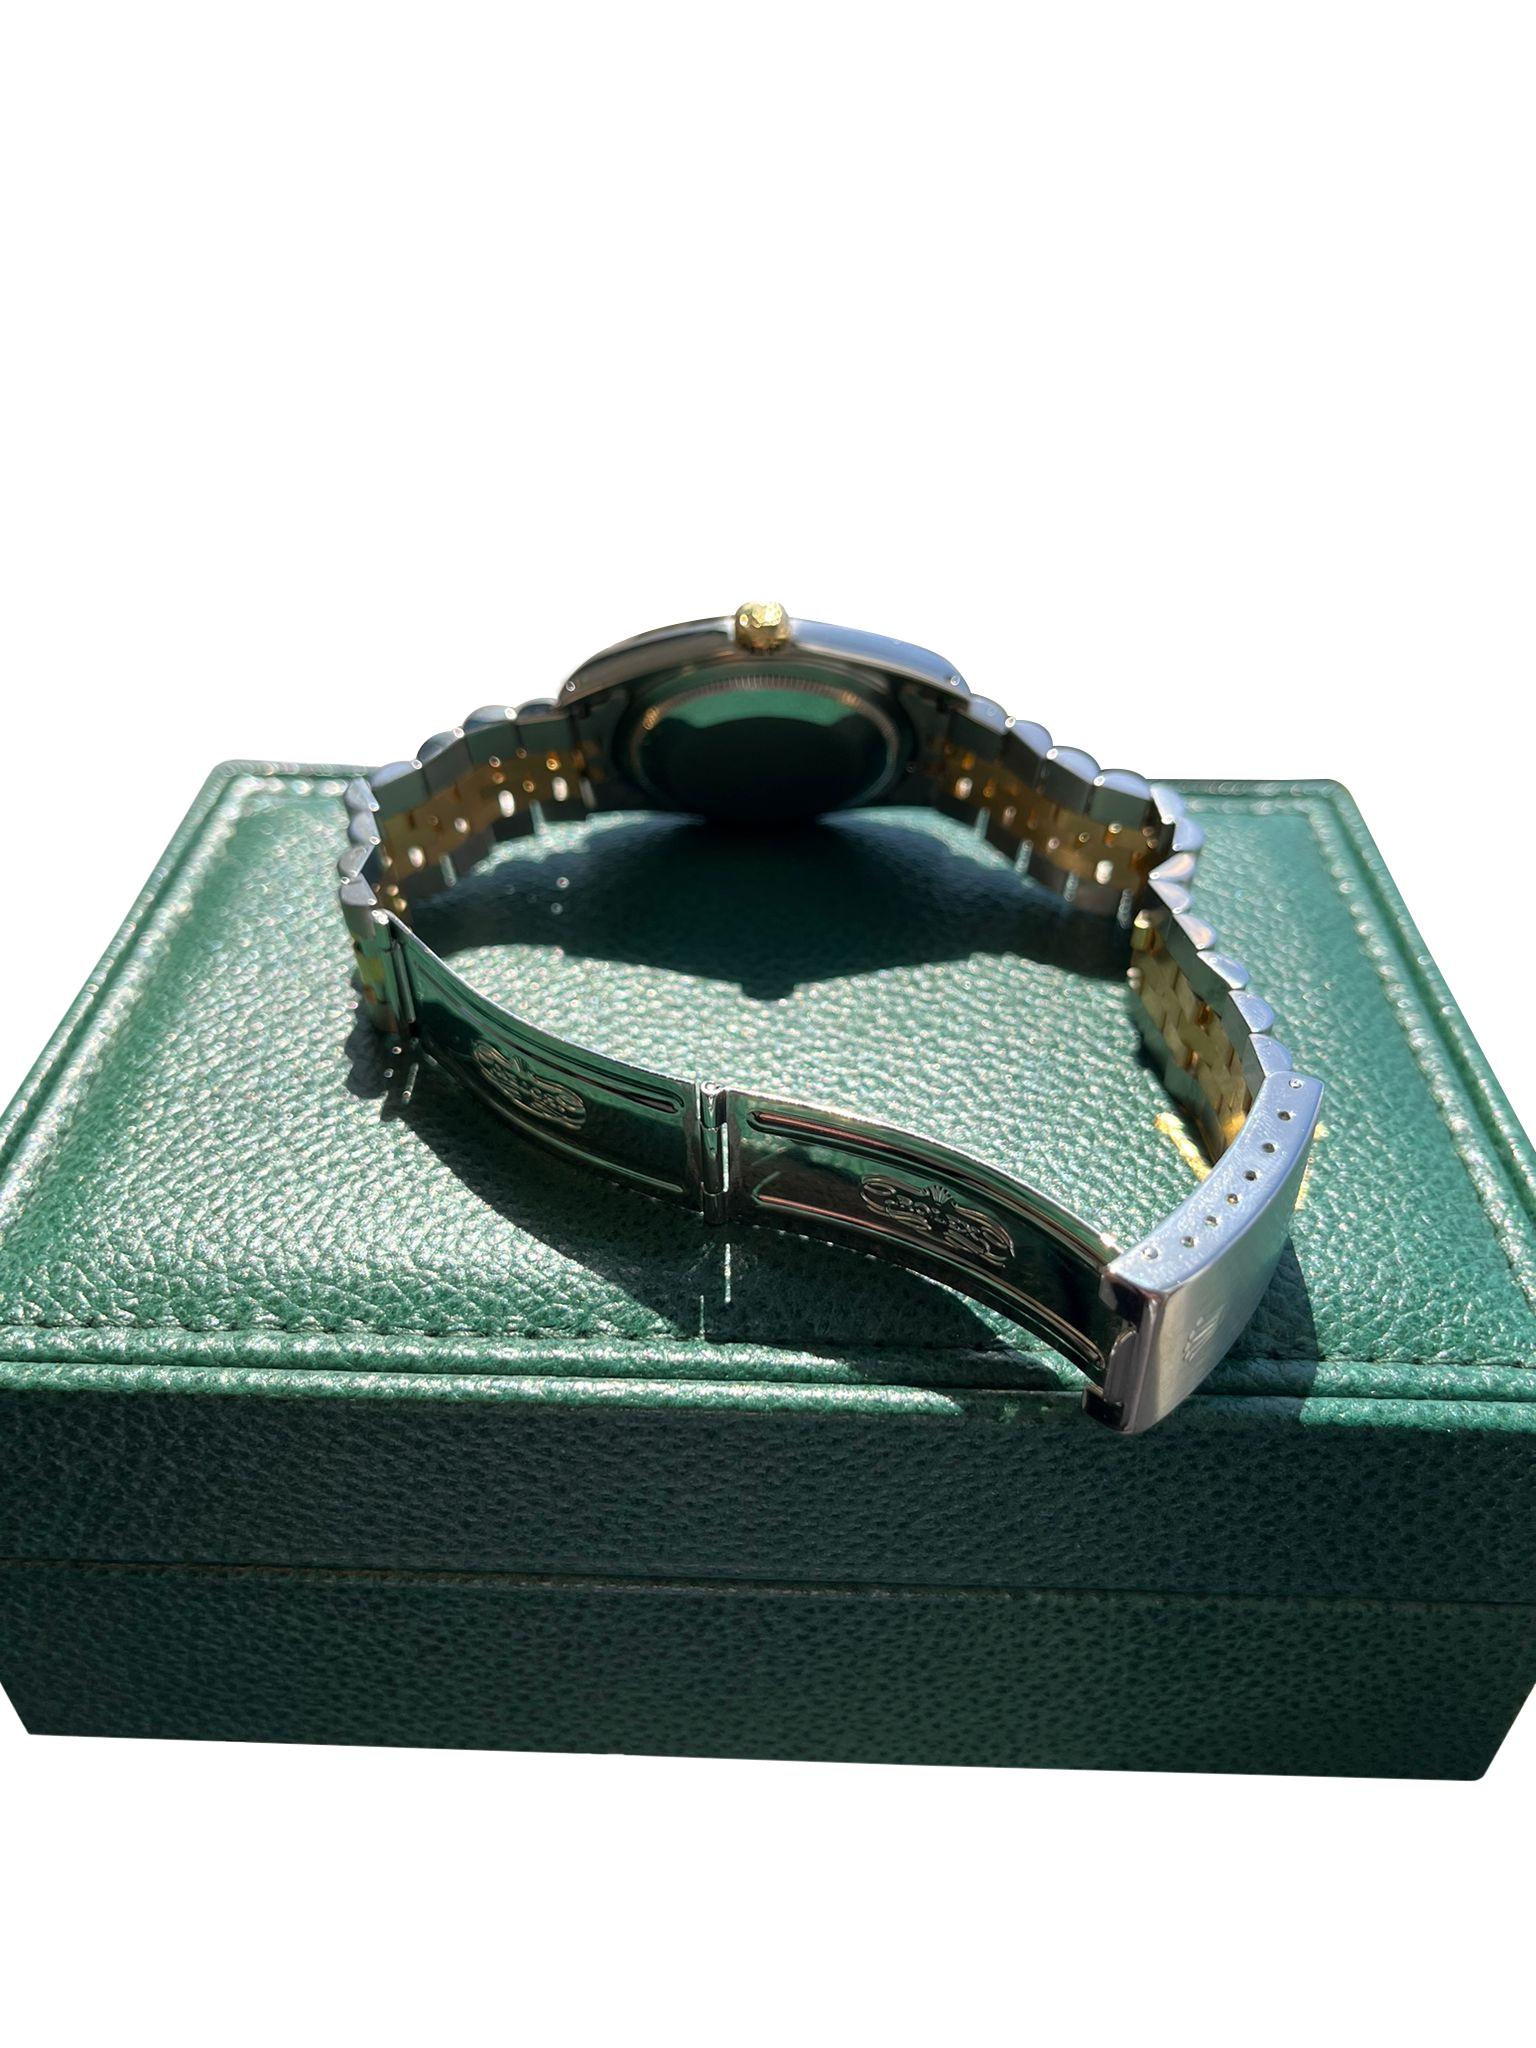 Rolex Datejust 36mm Black Dial 18K Yellow Gold Custom Diamond Bezel Watch 16233 For Sale 14